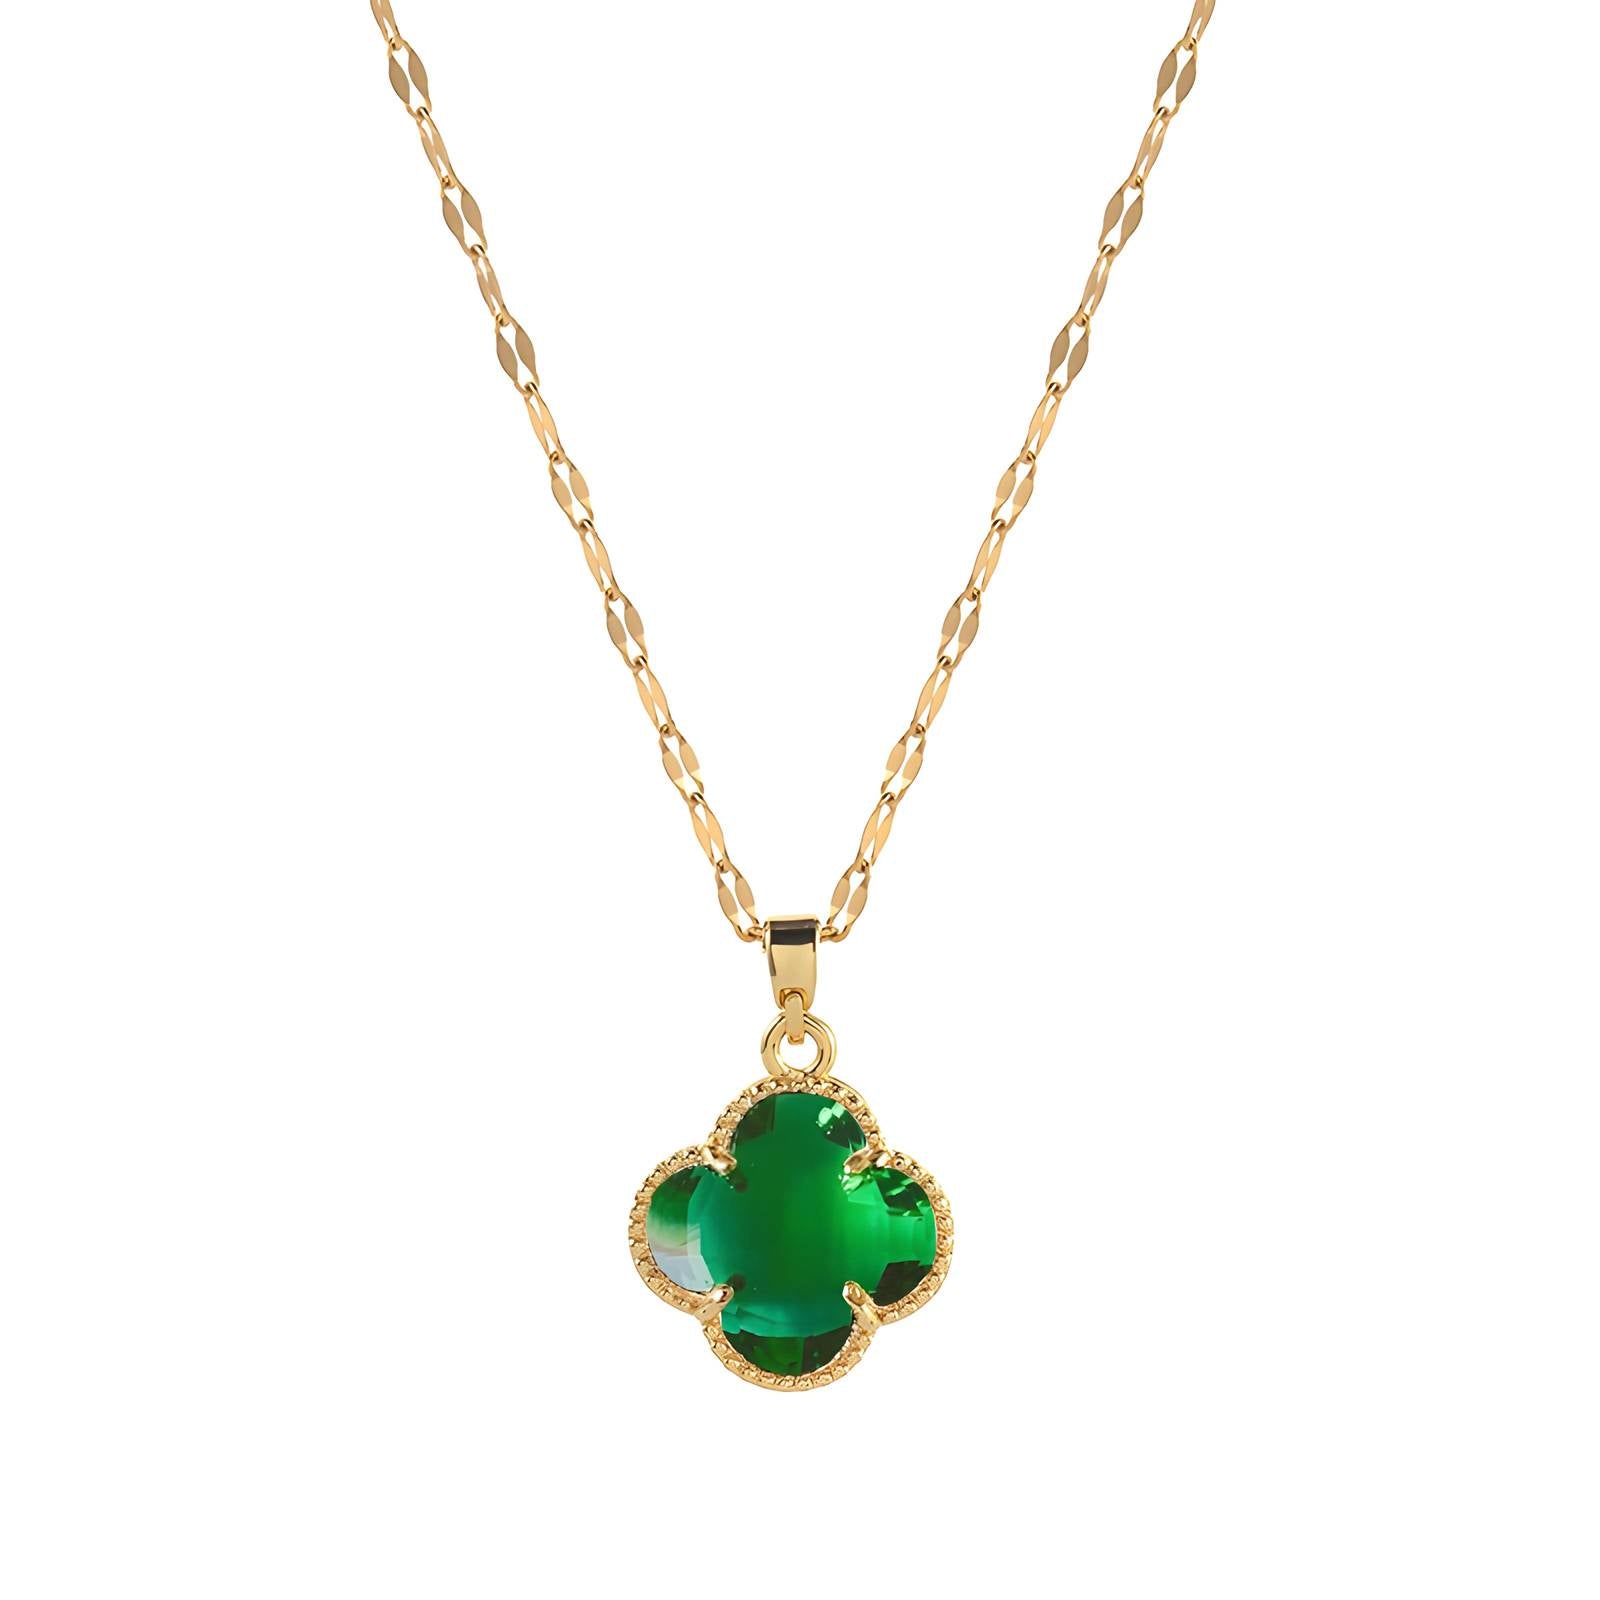 Four-leaf clover necklace - SAOROPHO